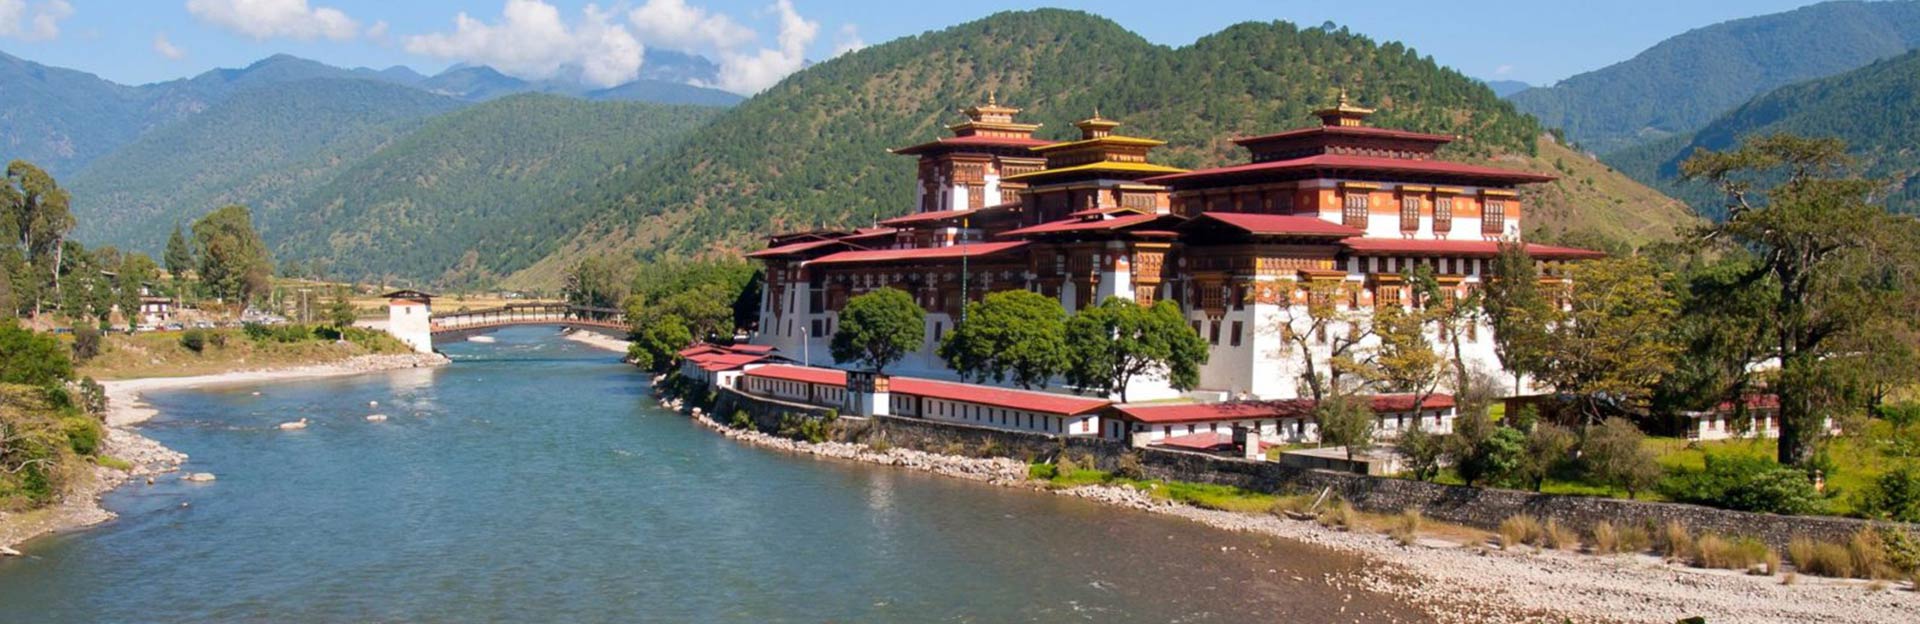 bhutan tibet and nepal tours